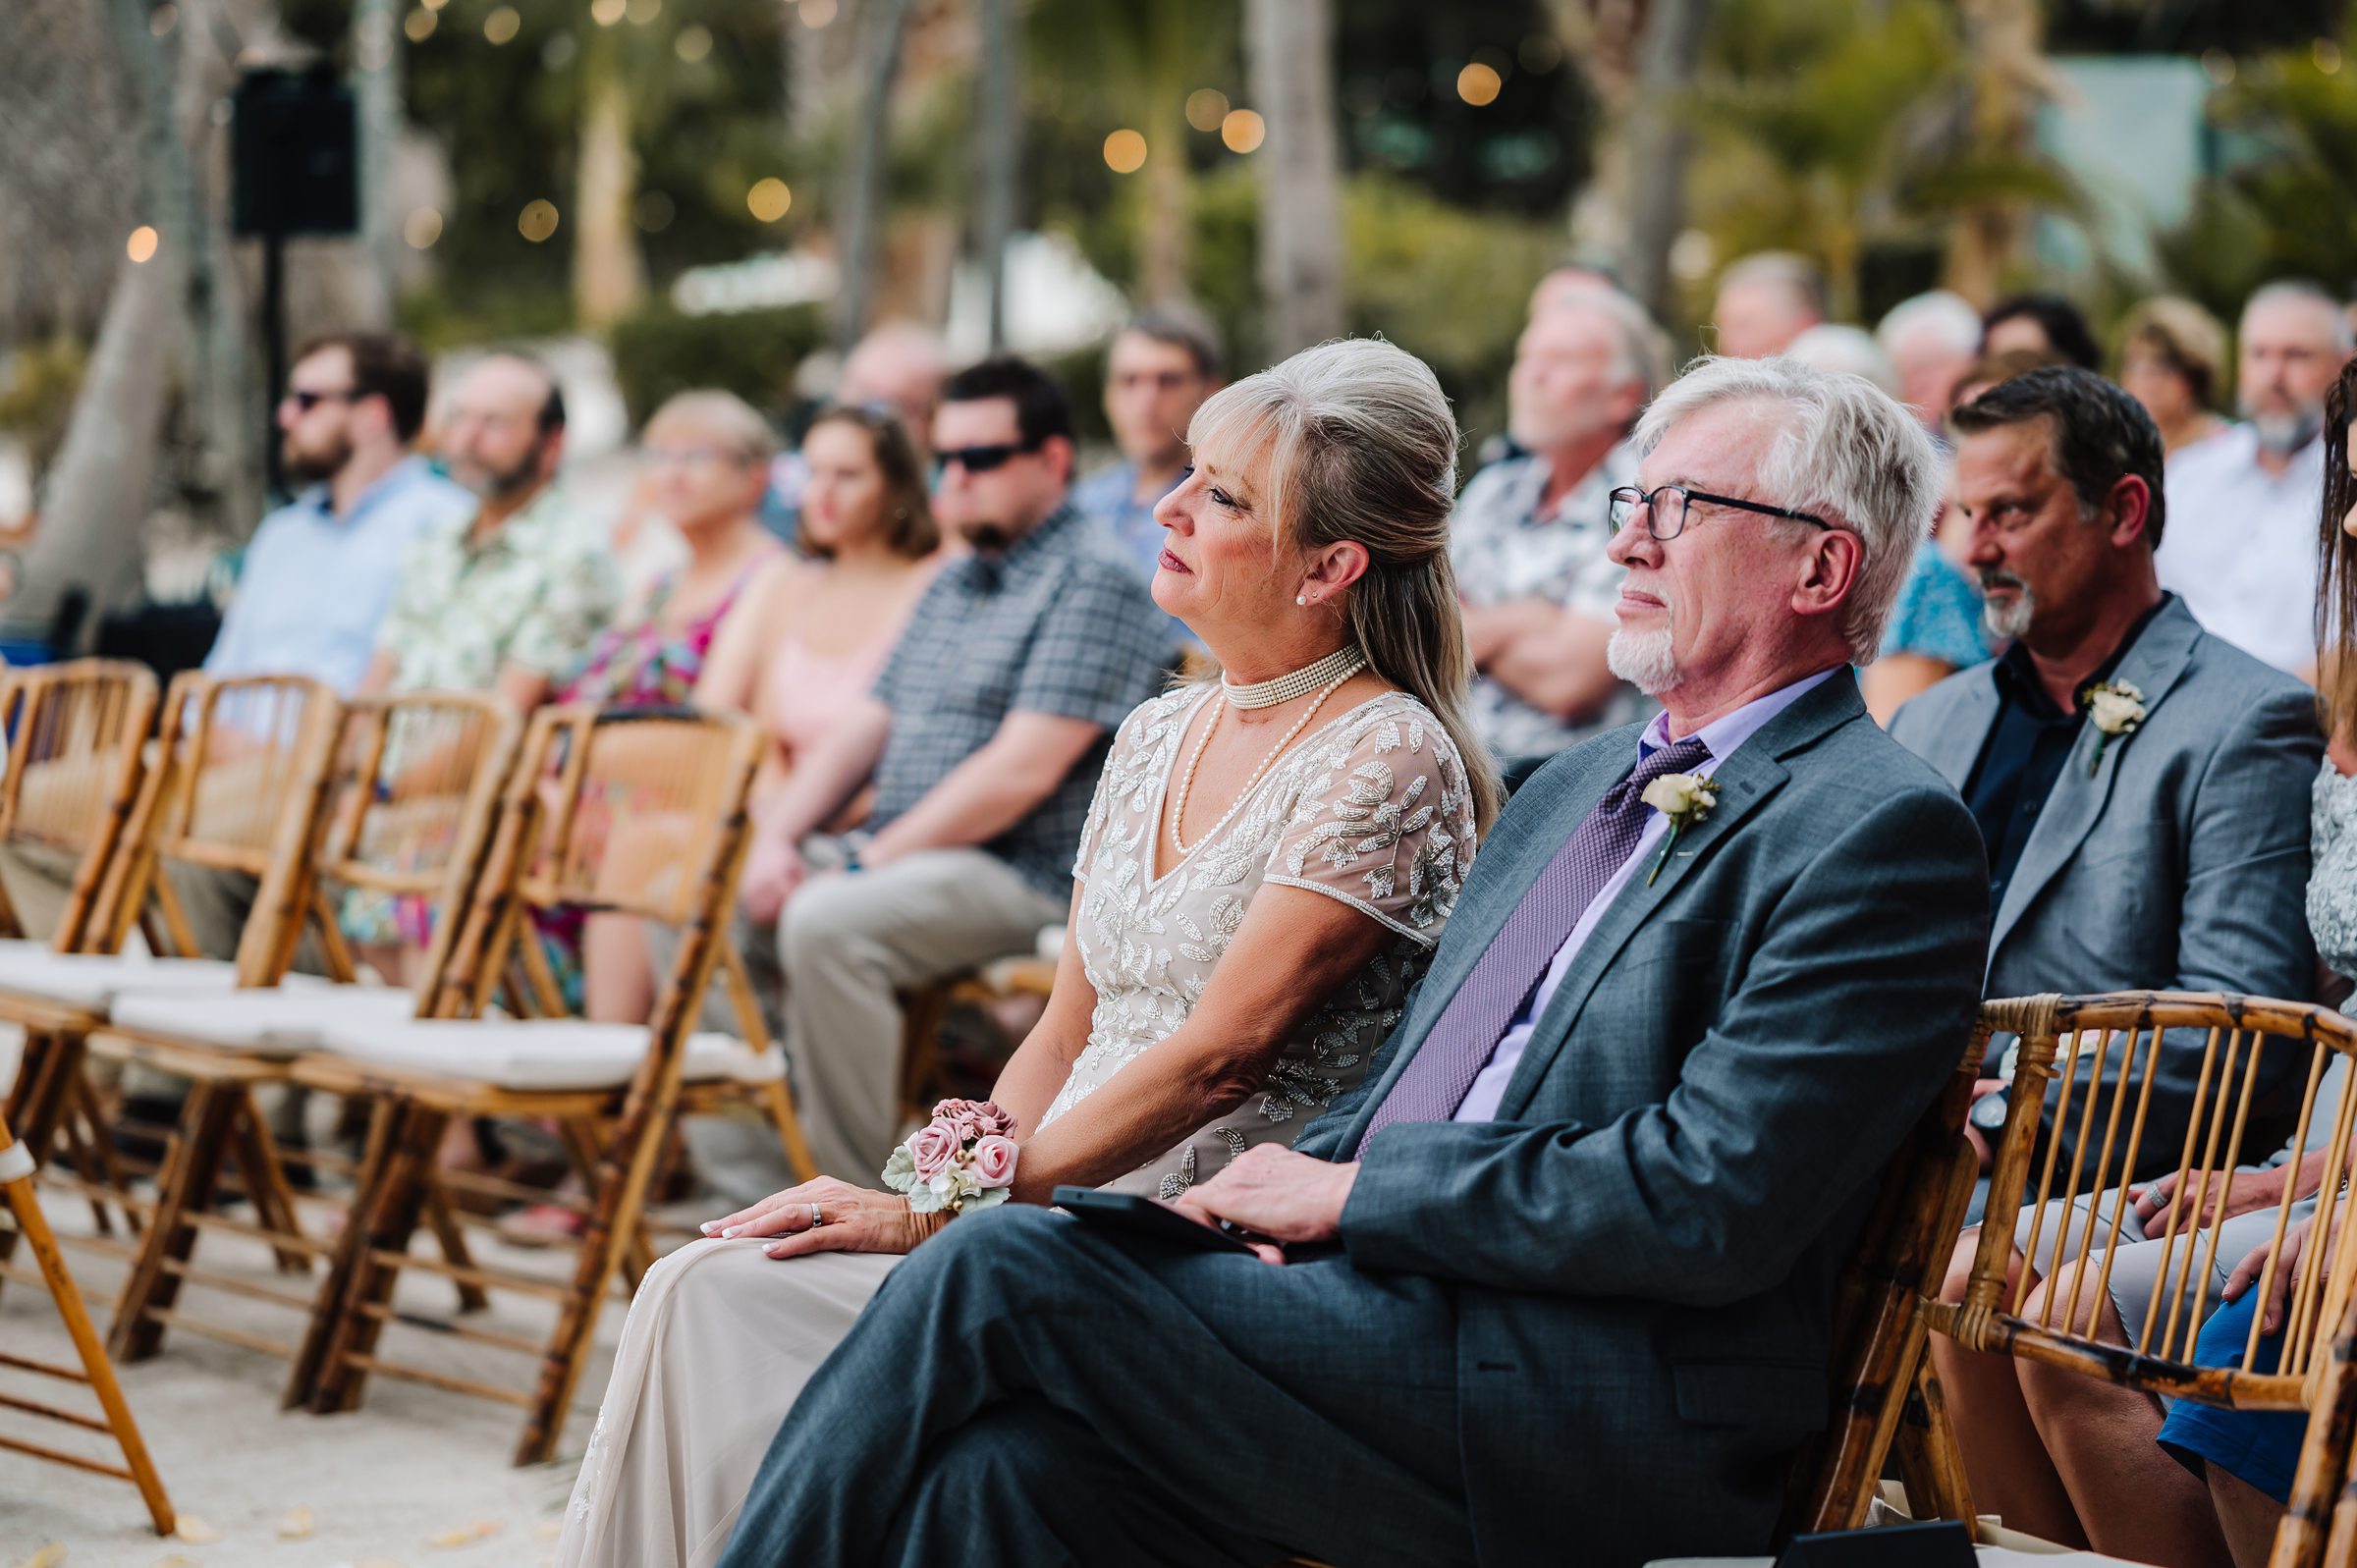 Florida Keys wedding guests enjoying a beachfront celebration at Dream Bay Resort.